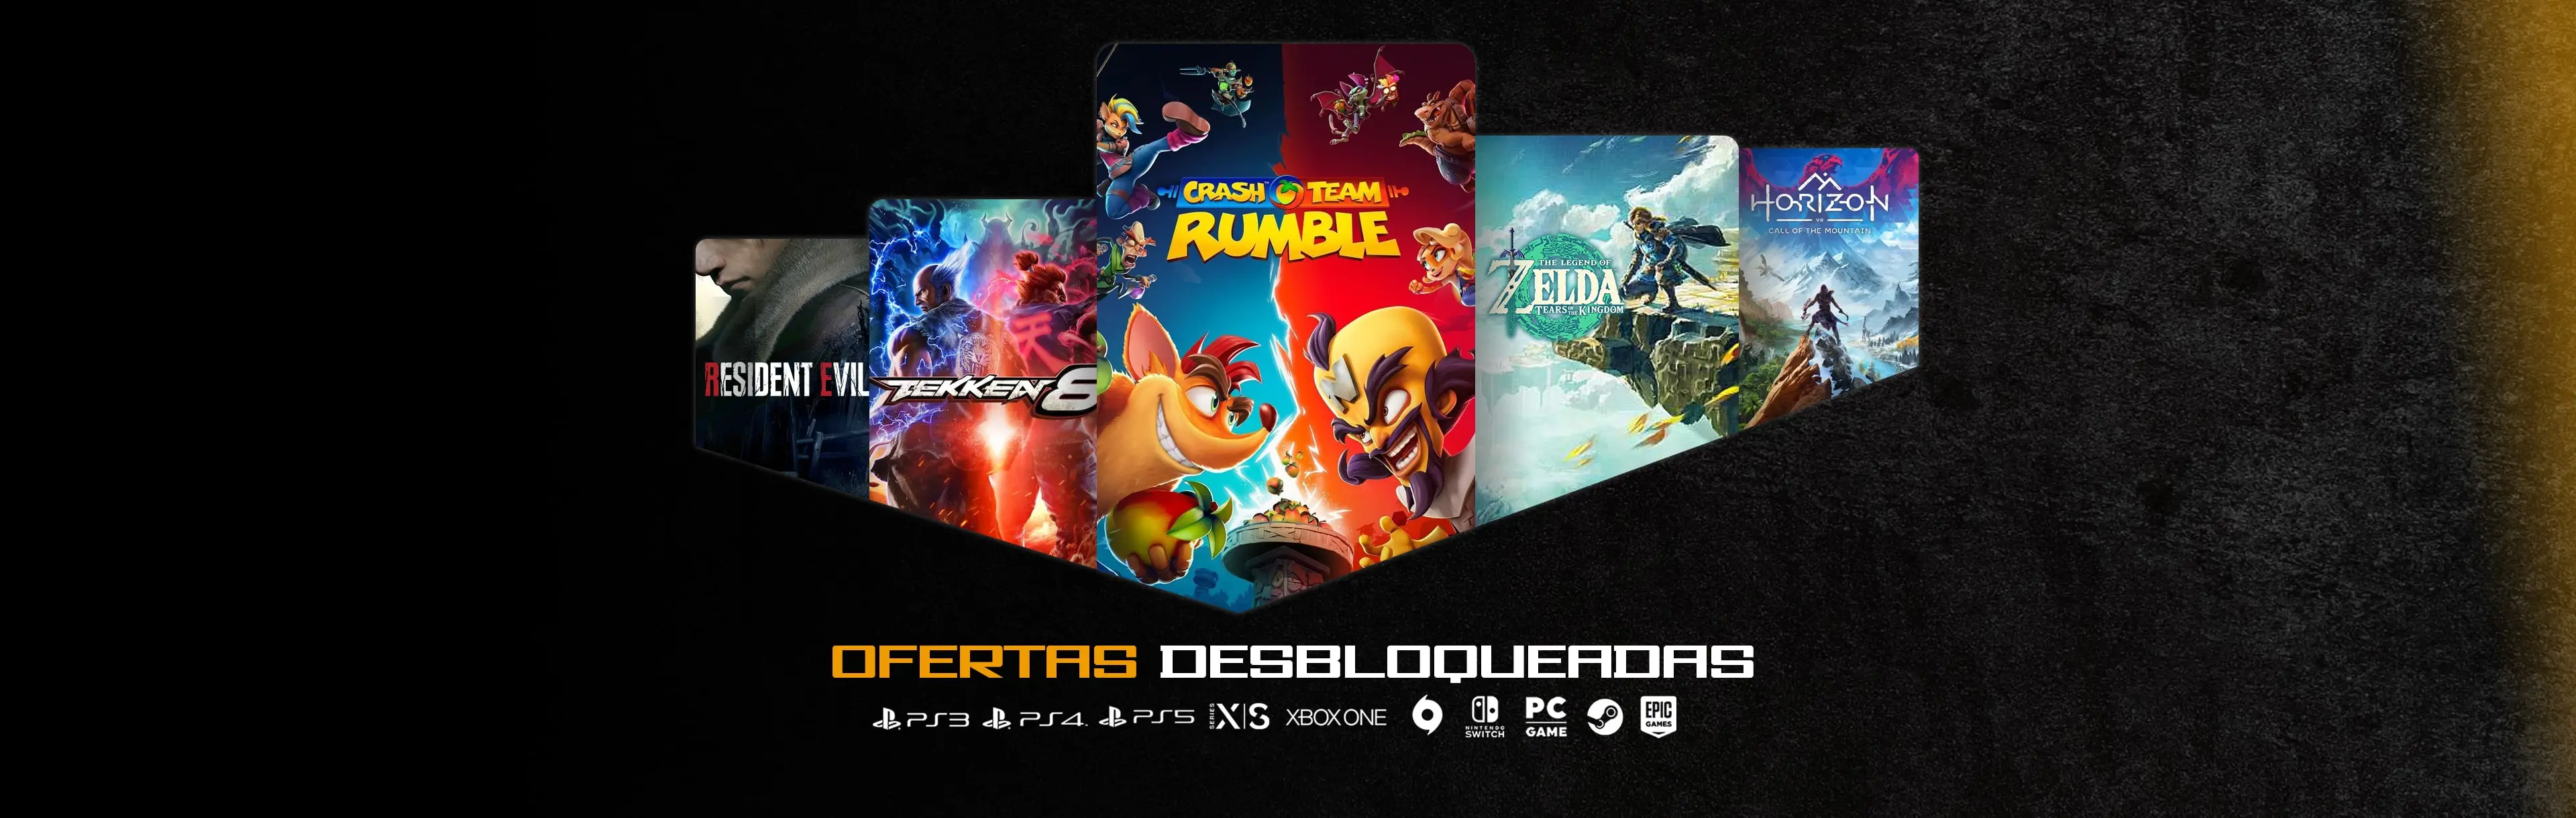 NEED FOR SPEED RIVALS PS5, Juegos Digitales Brasil